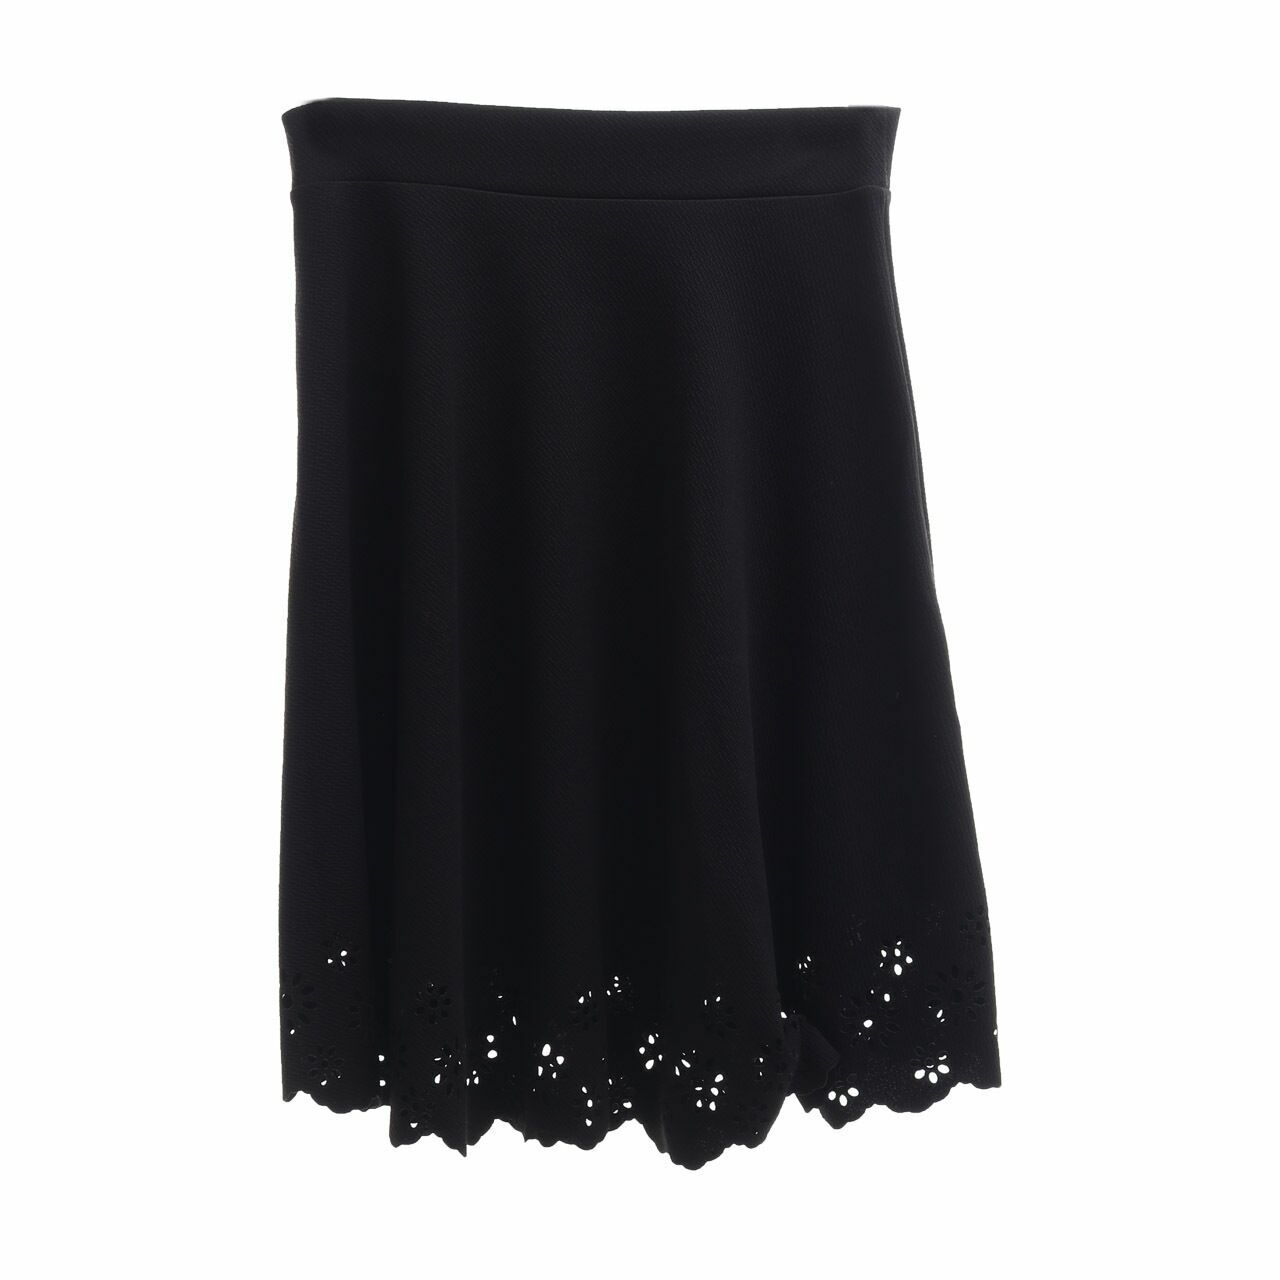 Chic Simple Black Mini Skirt